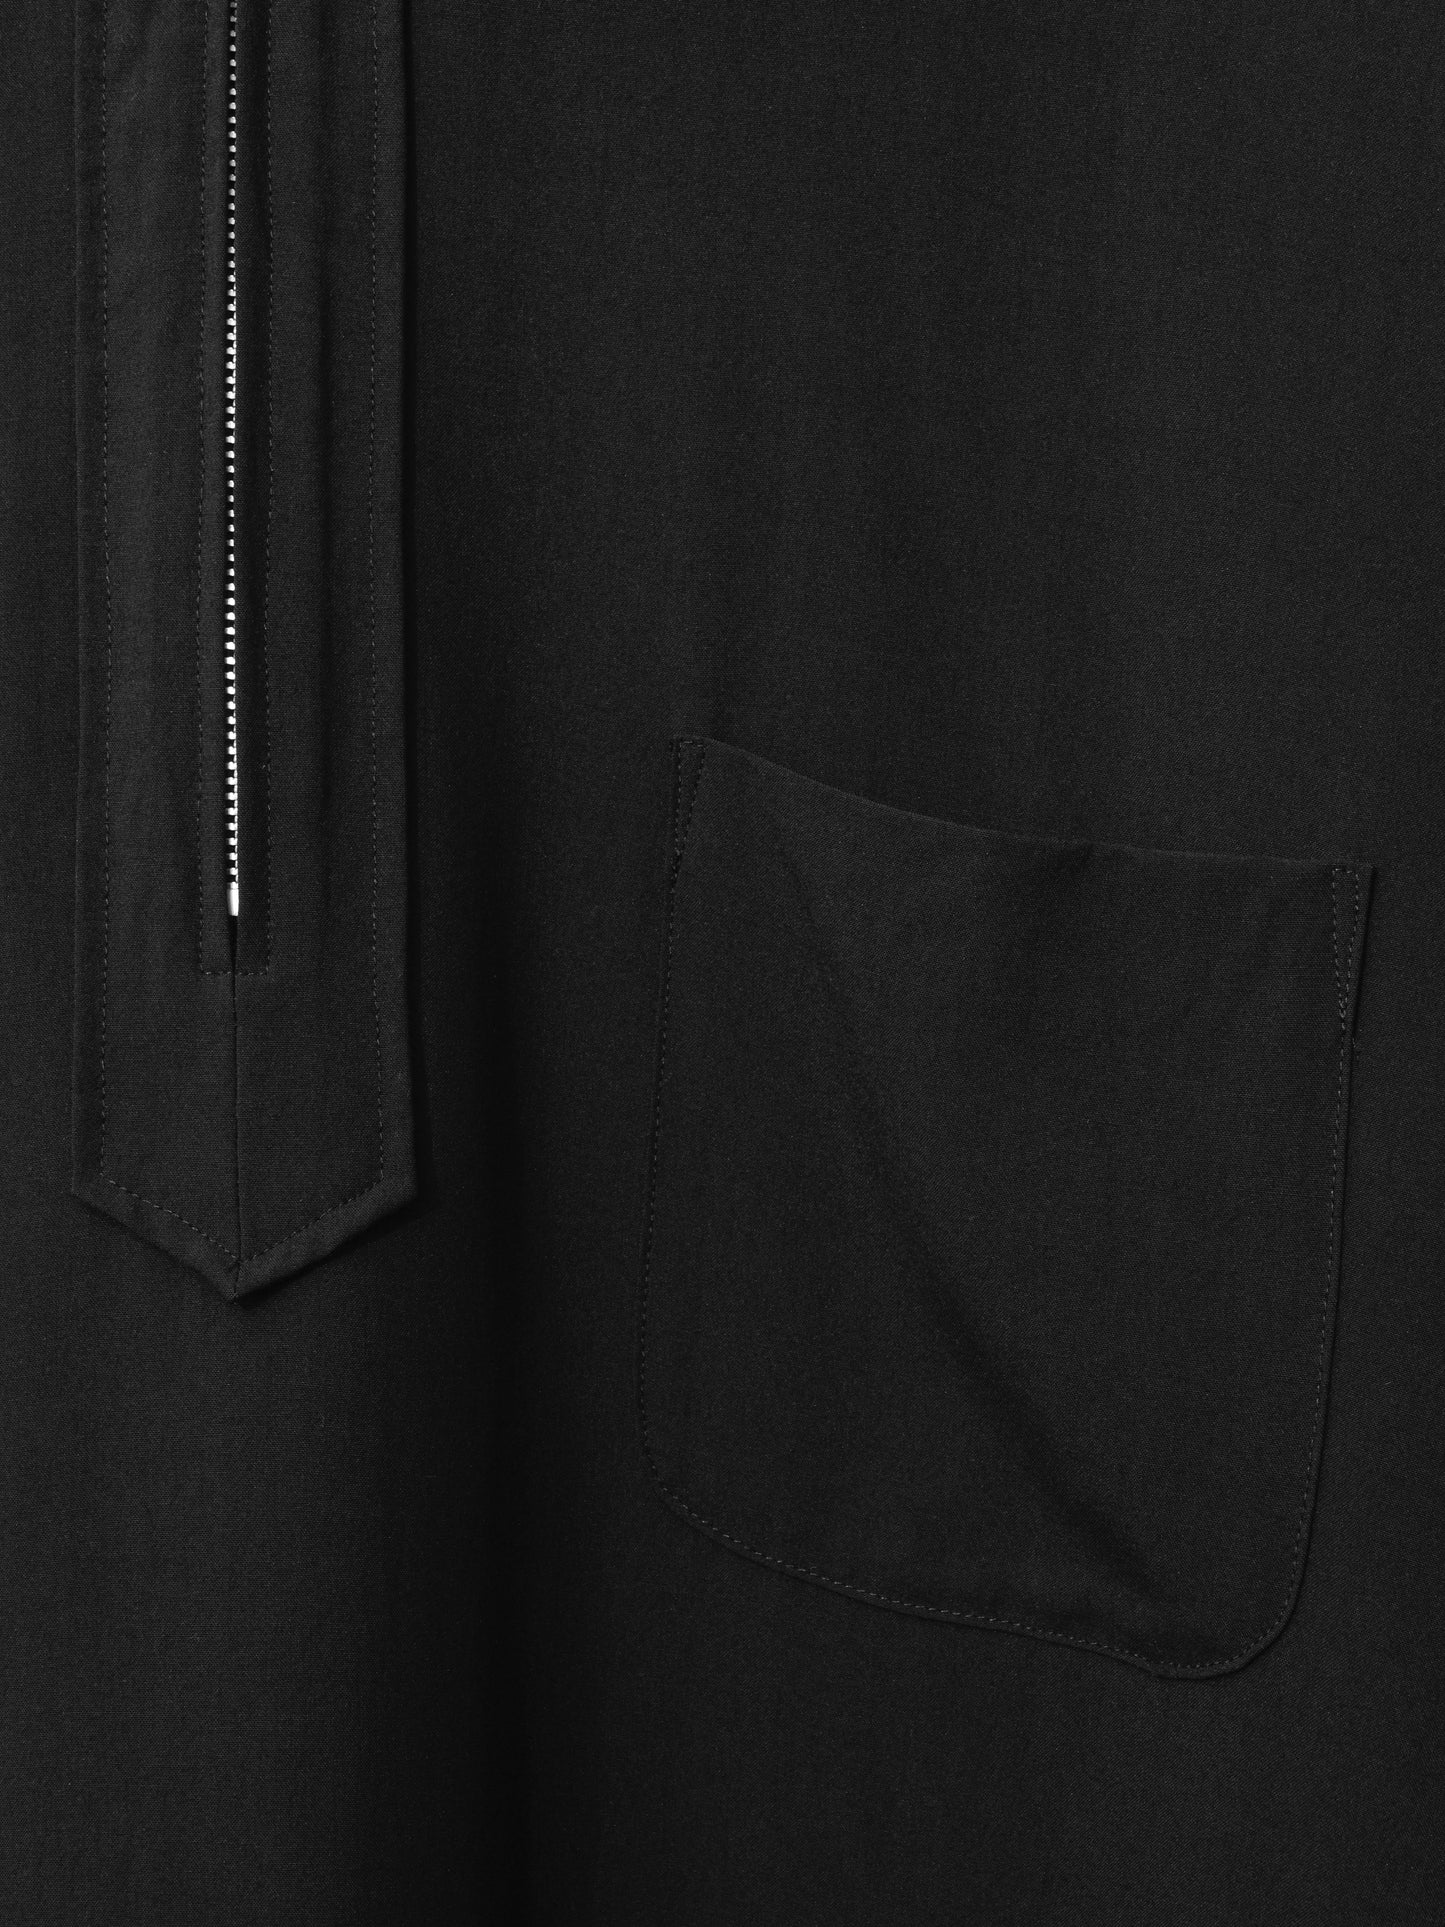 zip pullover shirt black ∙ rayon ∙ medium